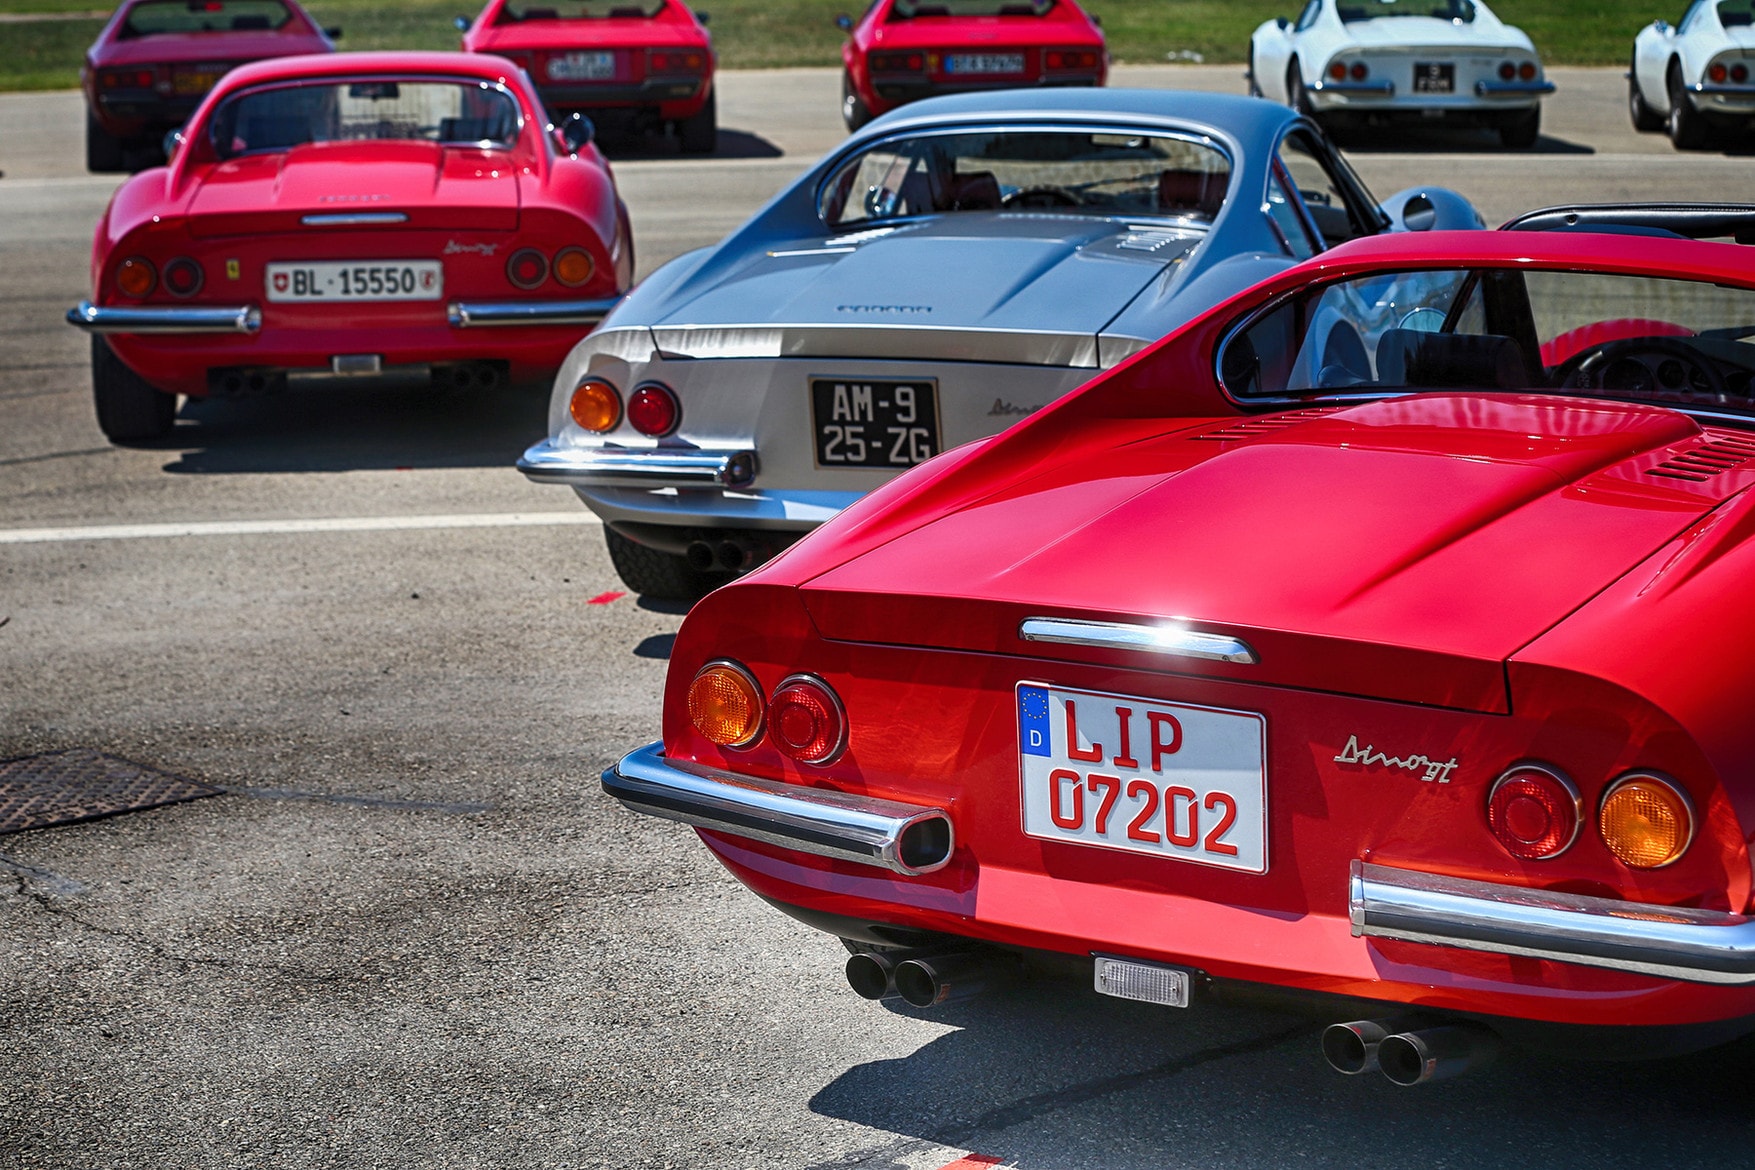 Ferrari 於意大利總部慶祝首部量產跑車 Dino 正式亮相 50 周年